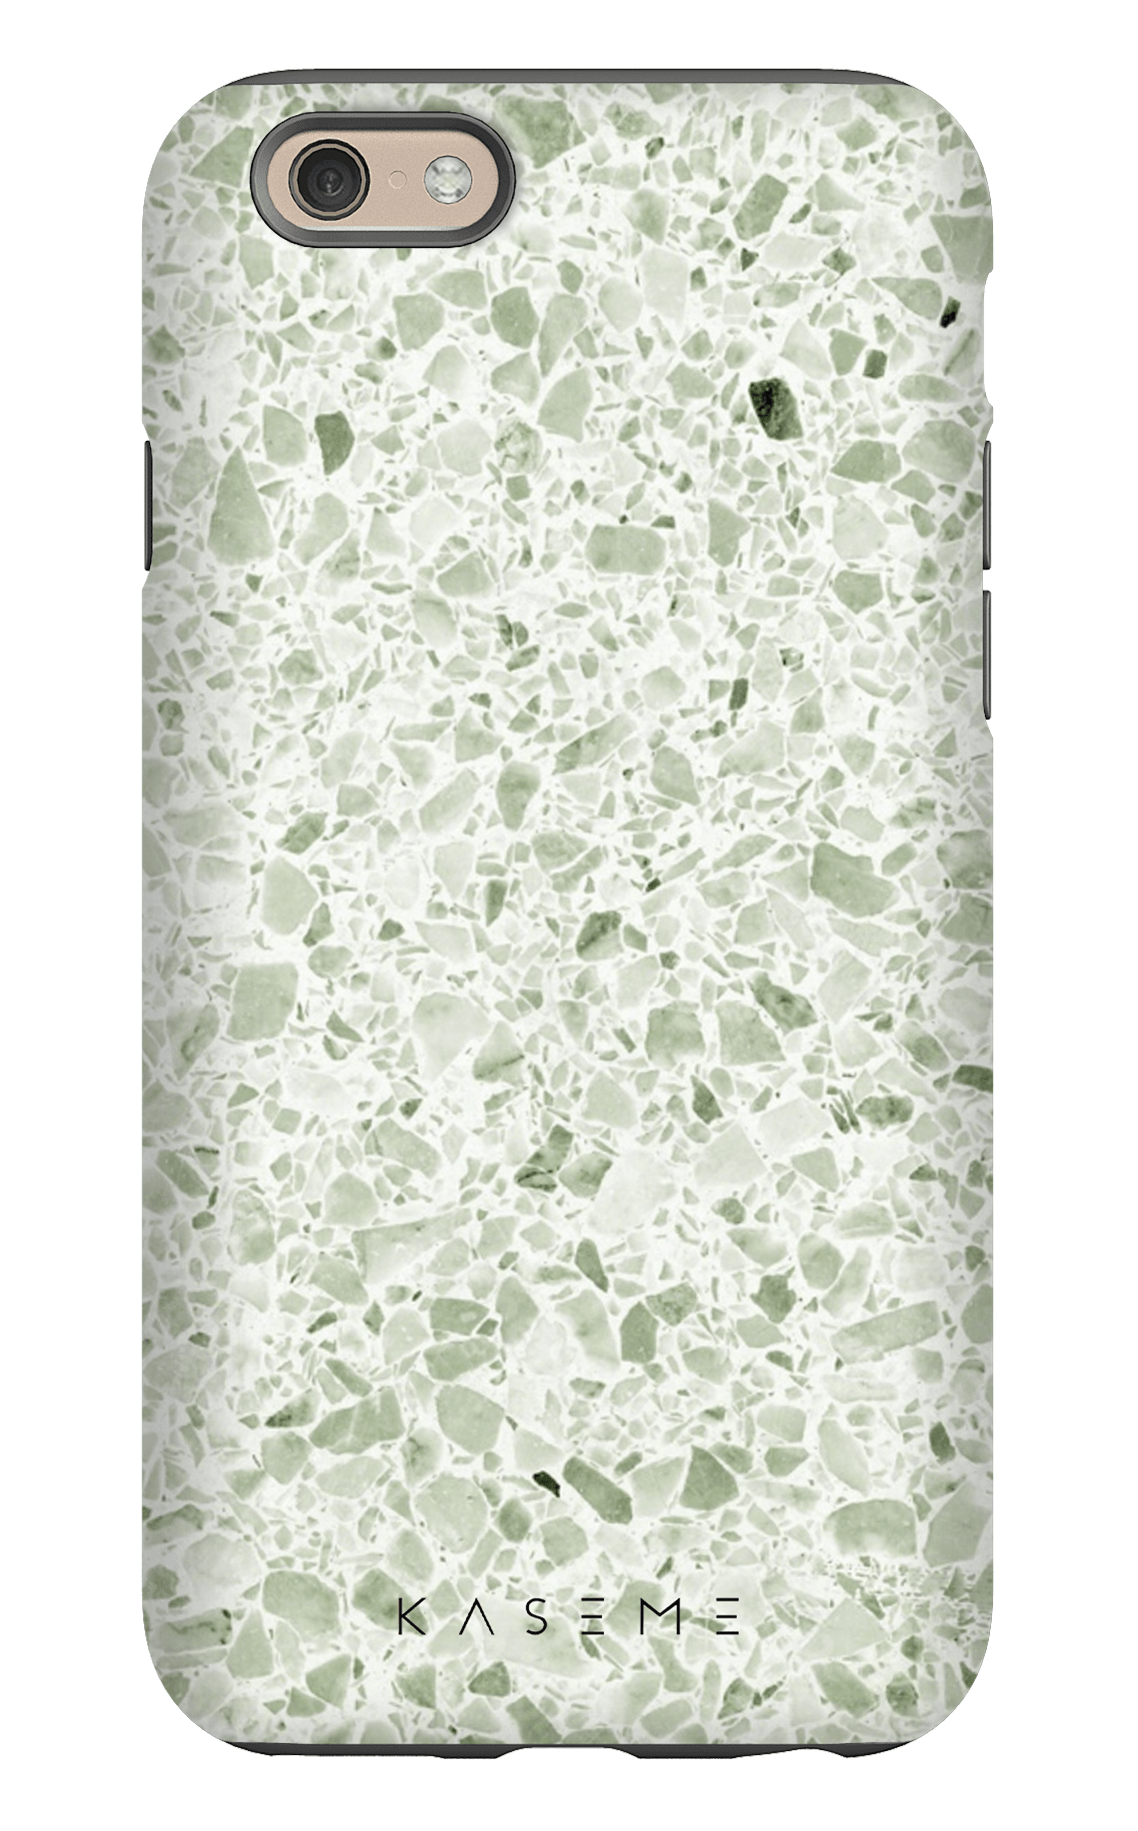 Frozen stone green - iPhone 6/6s